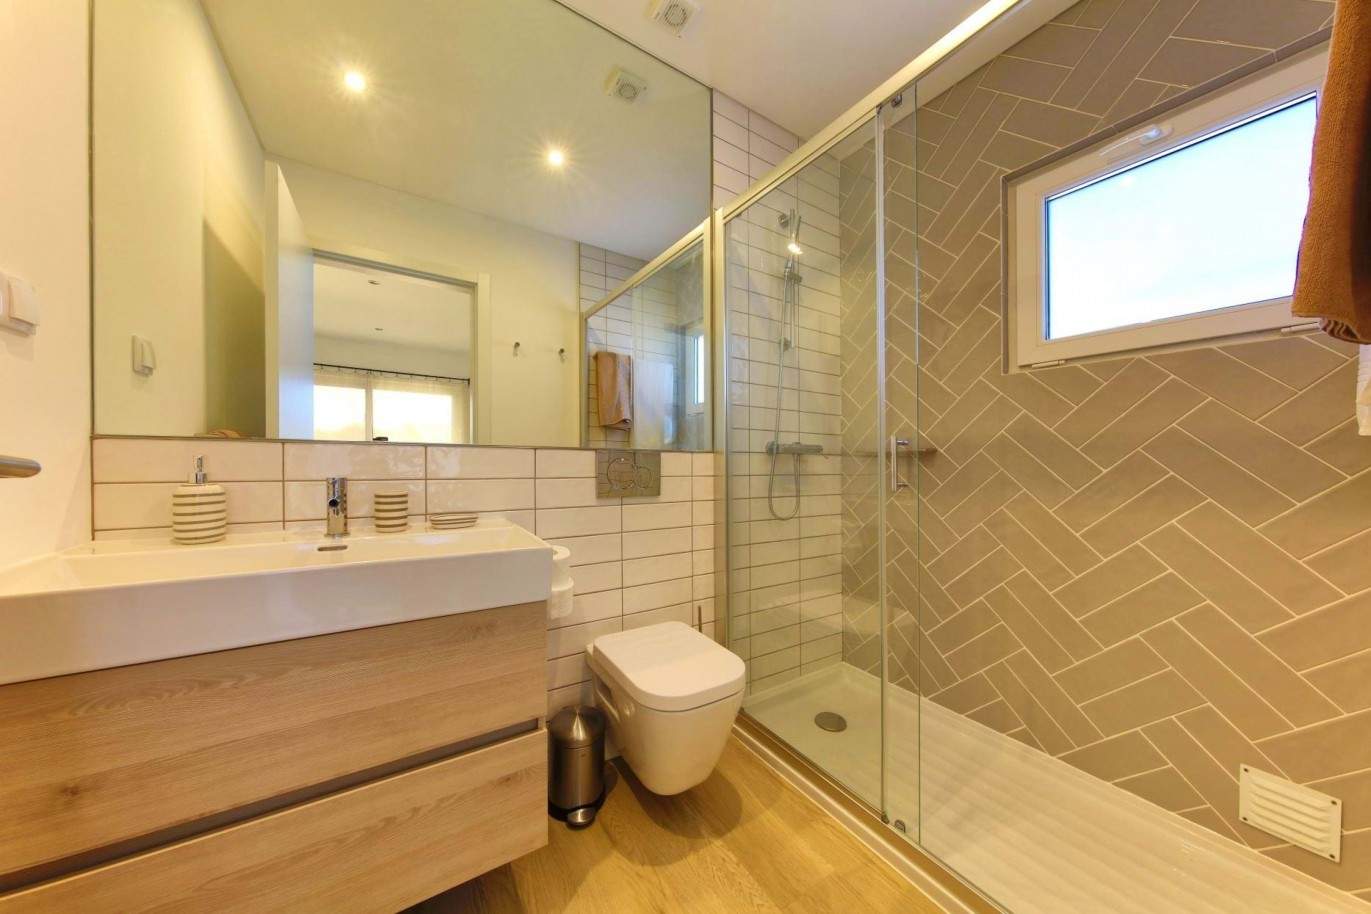 2+1 bedroom villa in resort, for sale in Carvoeiro, Algarve_206837